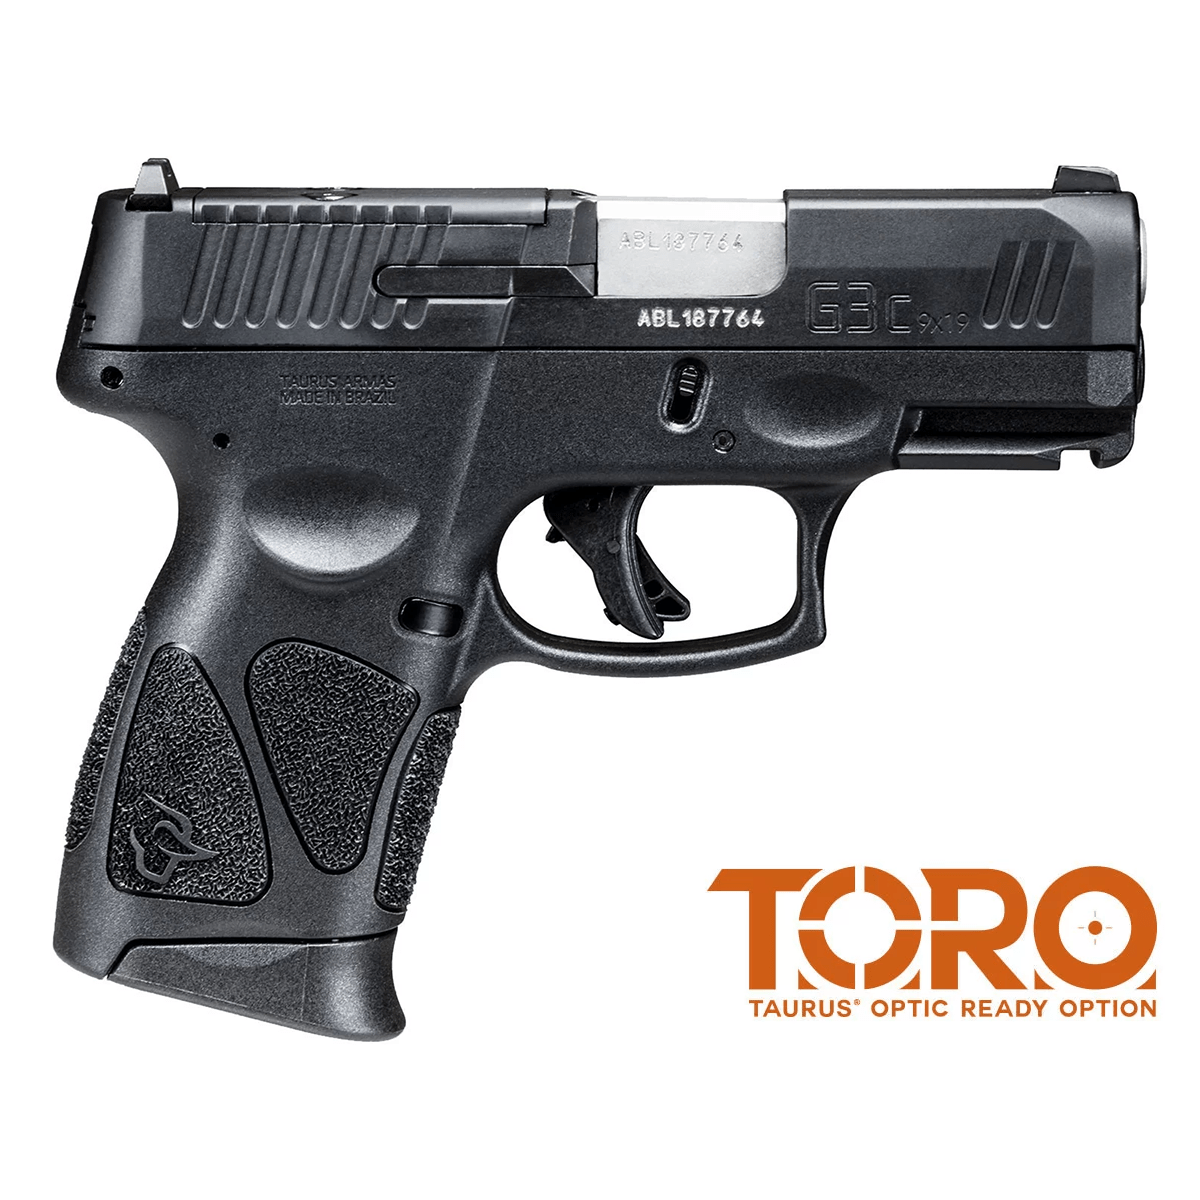 Taurus G3c T.O.R.O. 9mm Compact Pistol